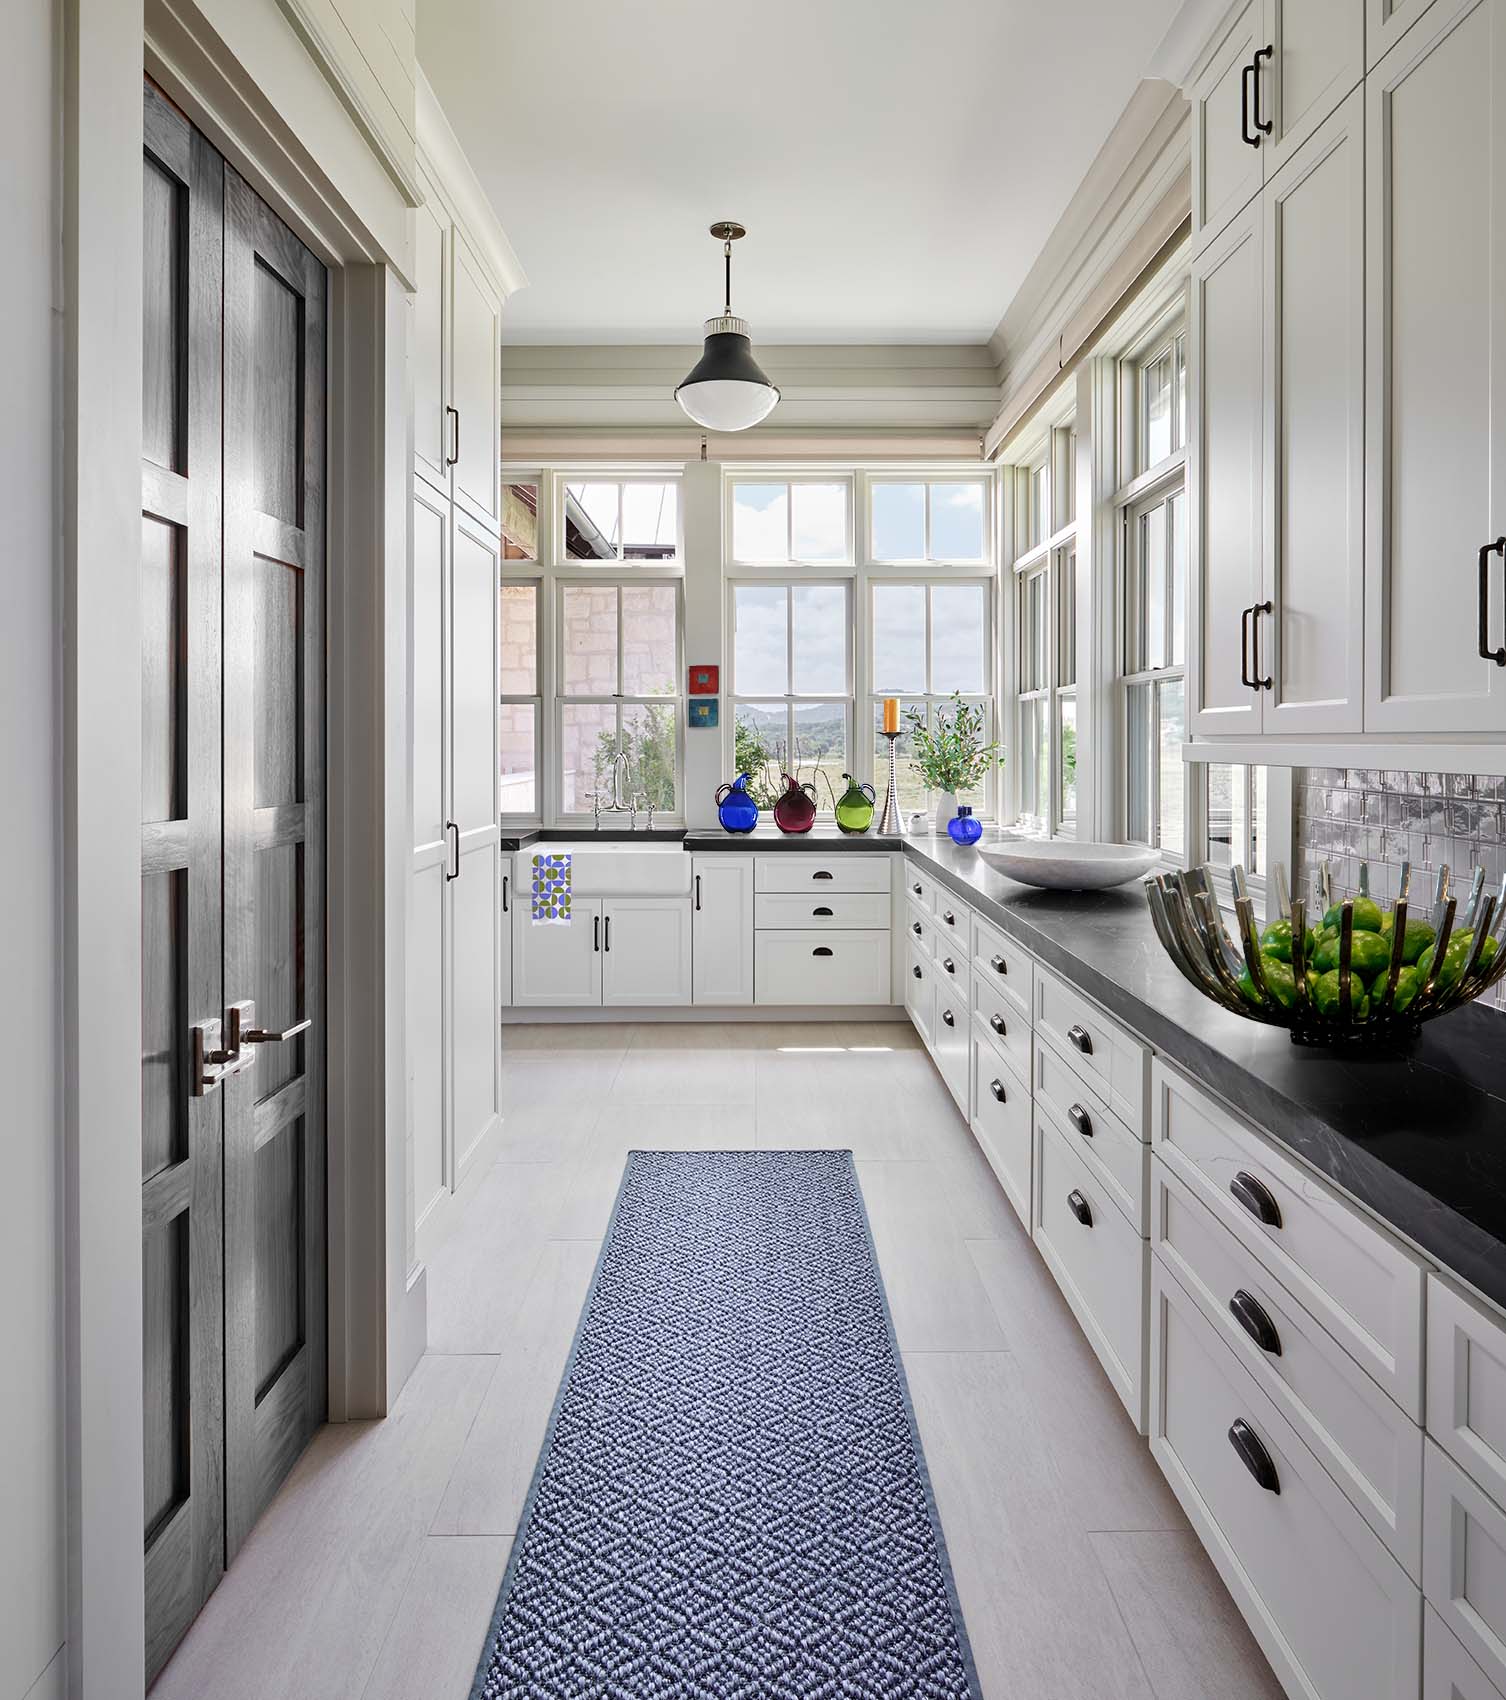 White kitchen mock-up in contemporary modern style, white kitchen ideas blog